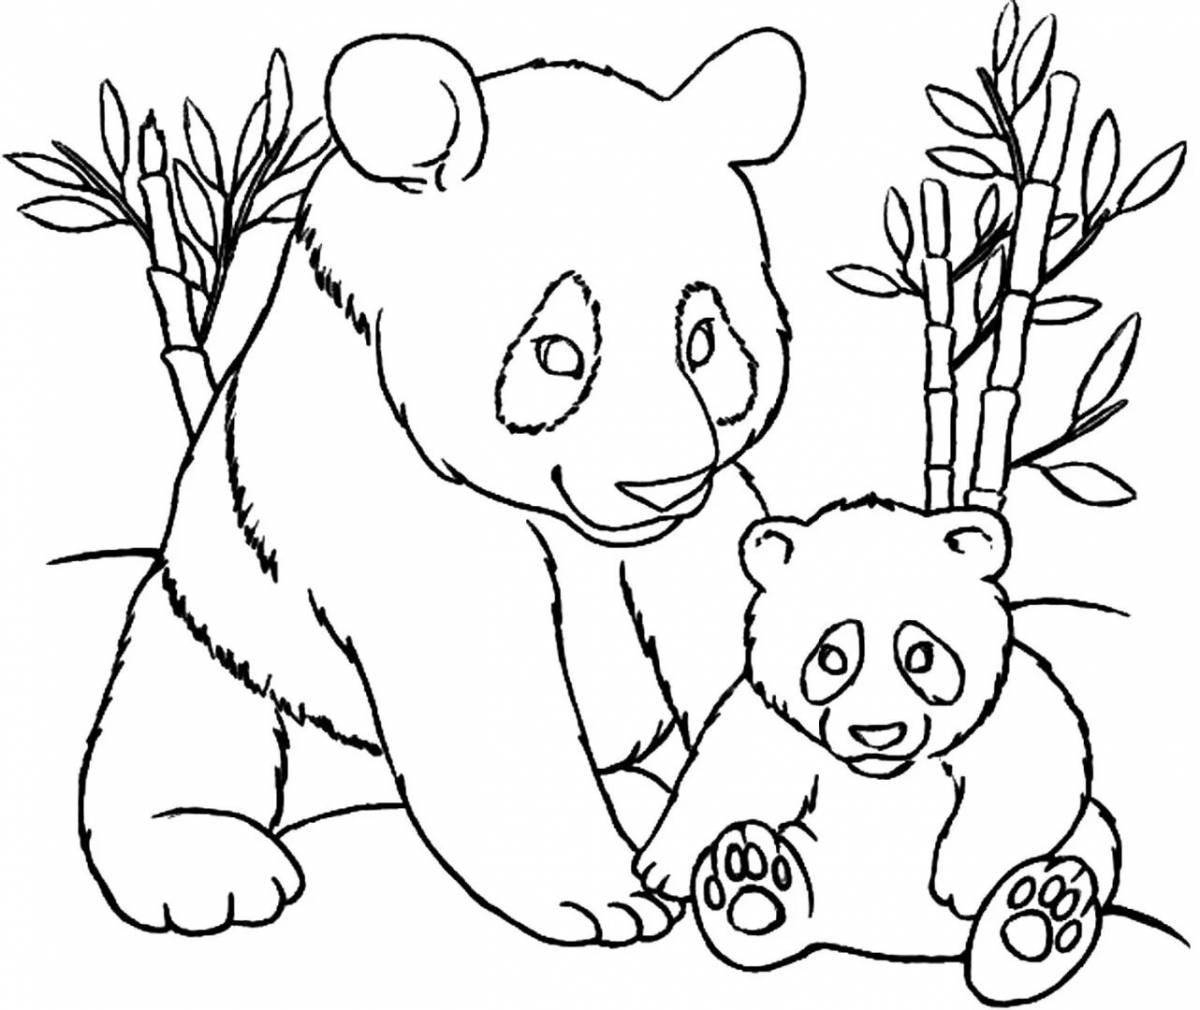 Animated baby panda coloring page